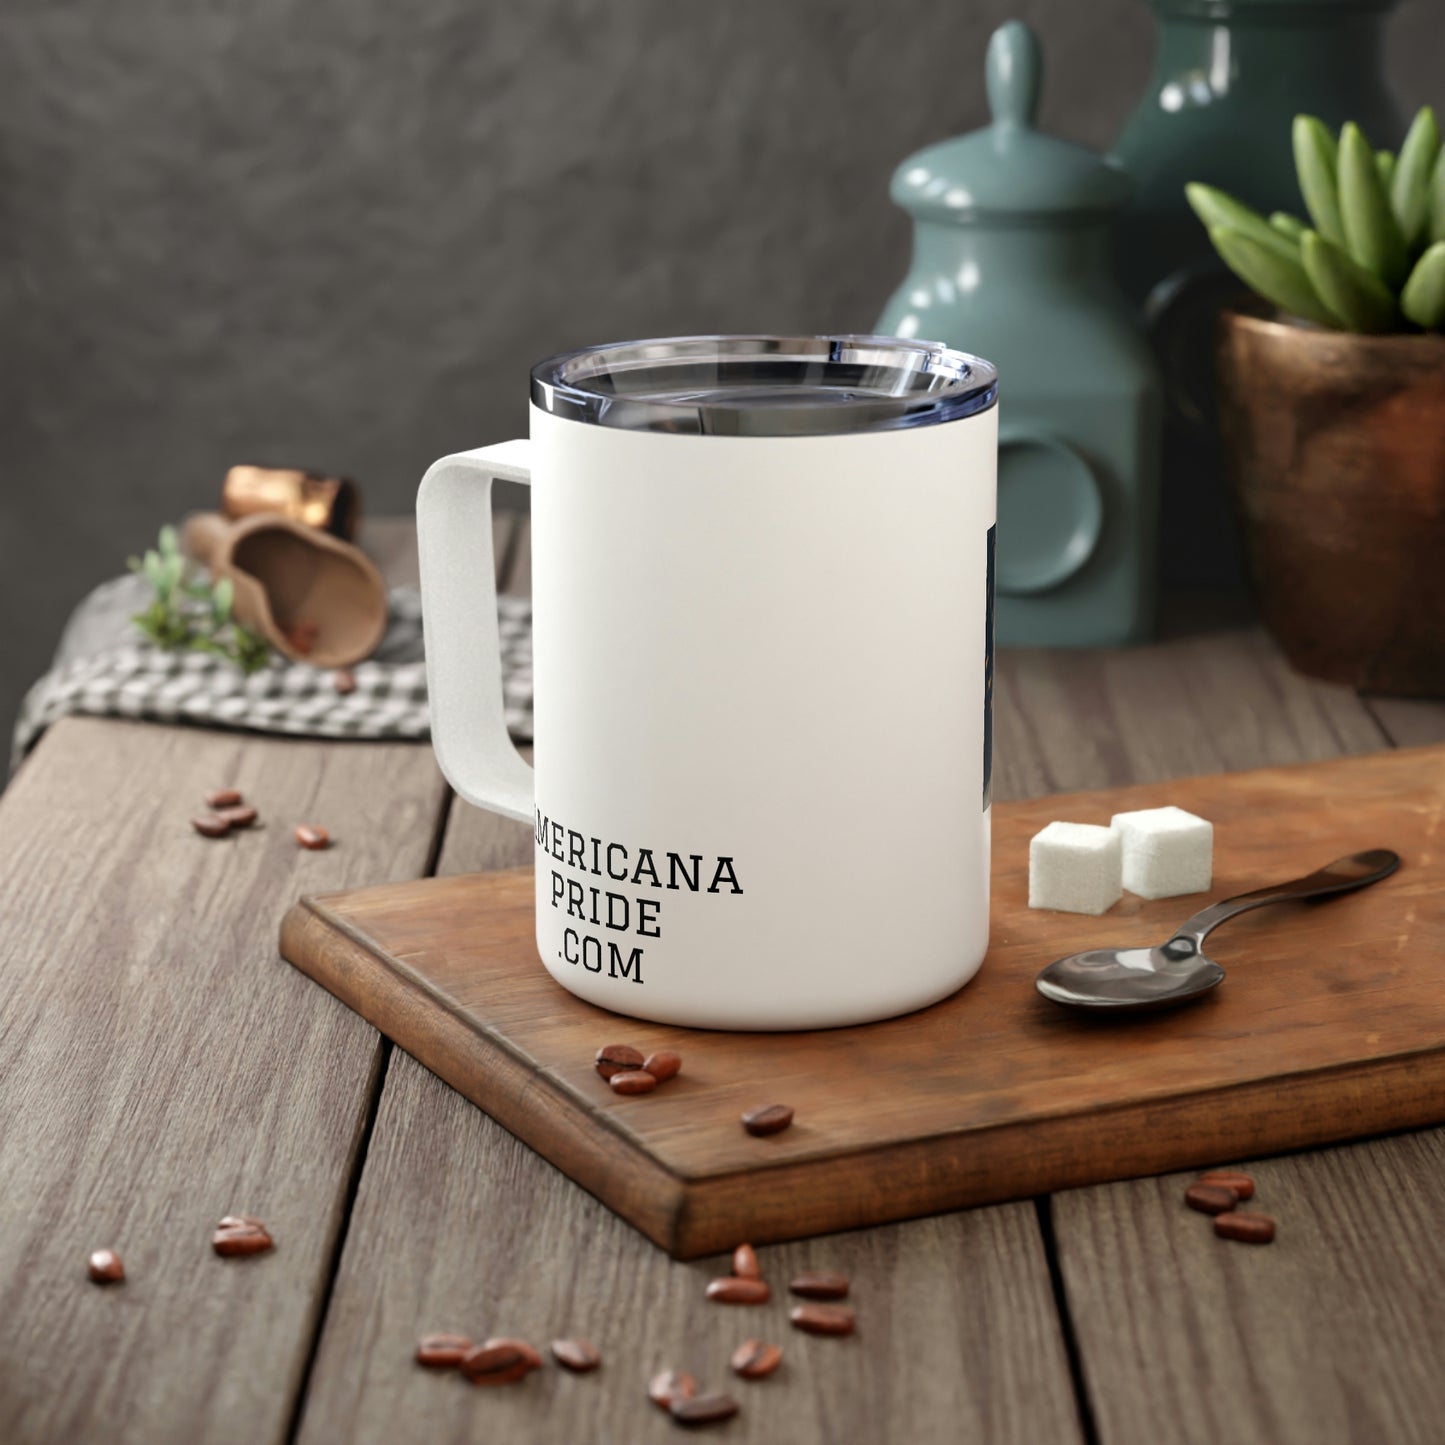 Americana Pride Insulated Coffee Mug, 10oz